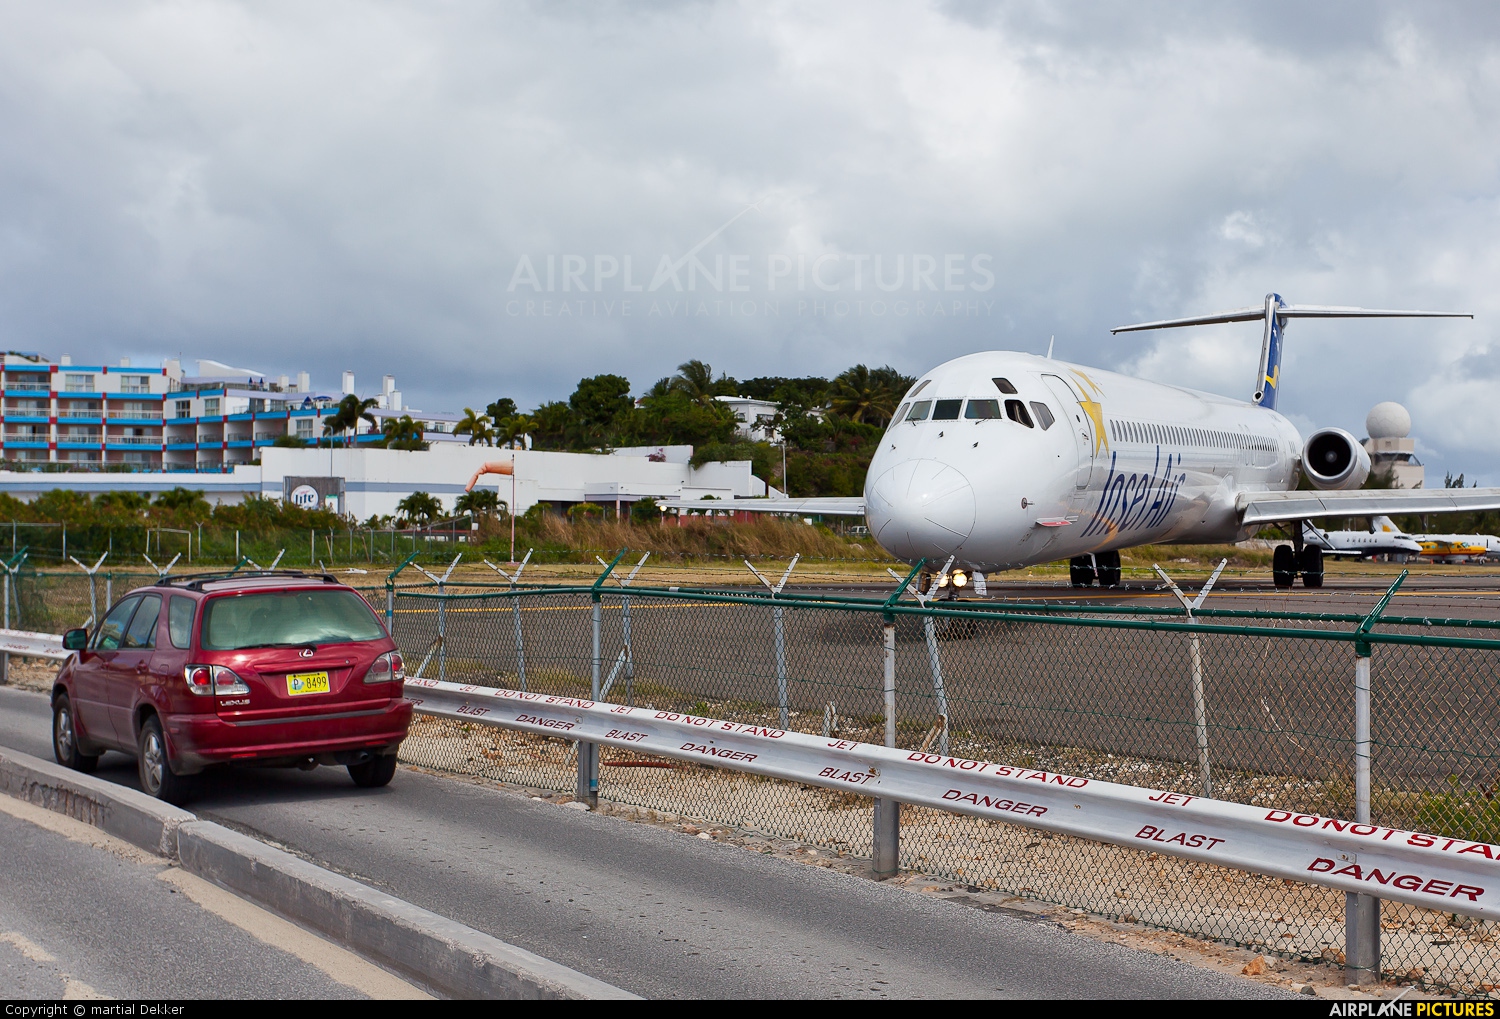 Insel Air PJ-MDC aircraft at Sint Maarten - Princess Juliana Intl